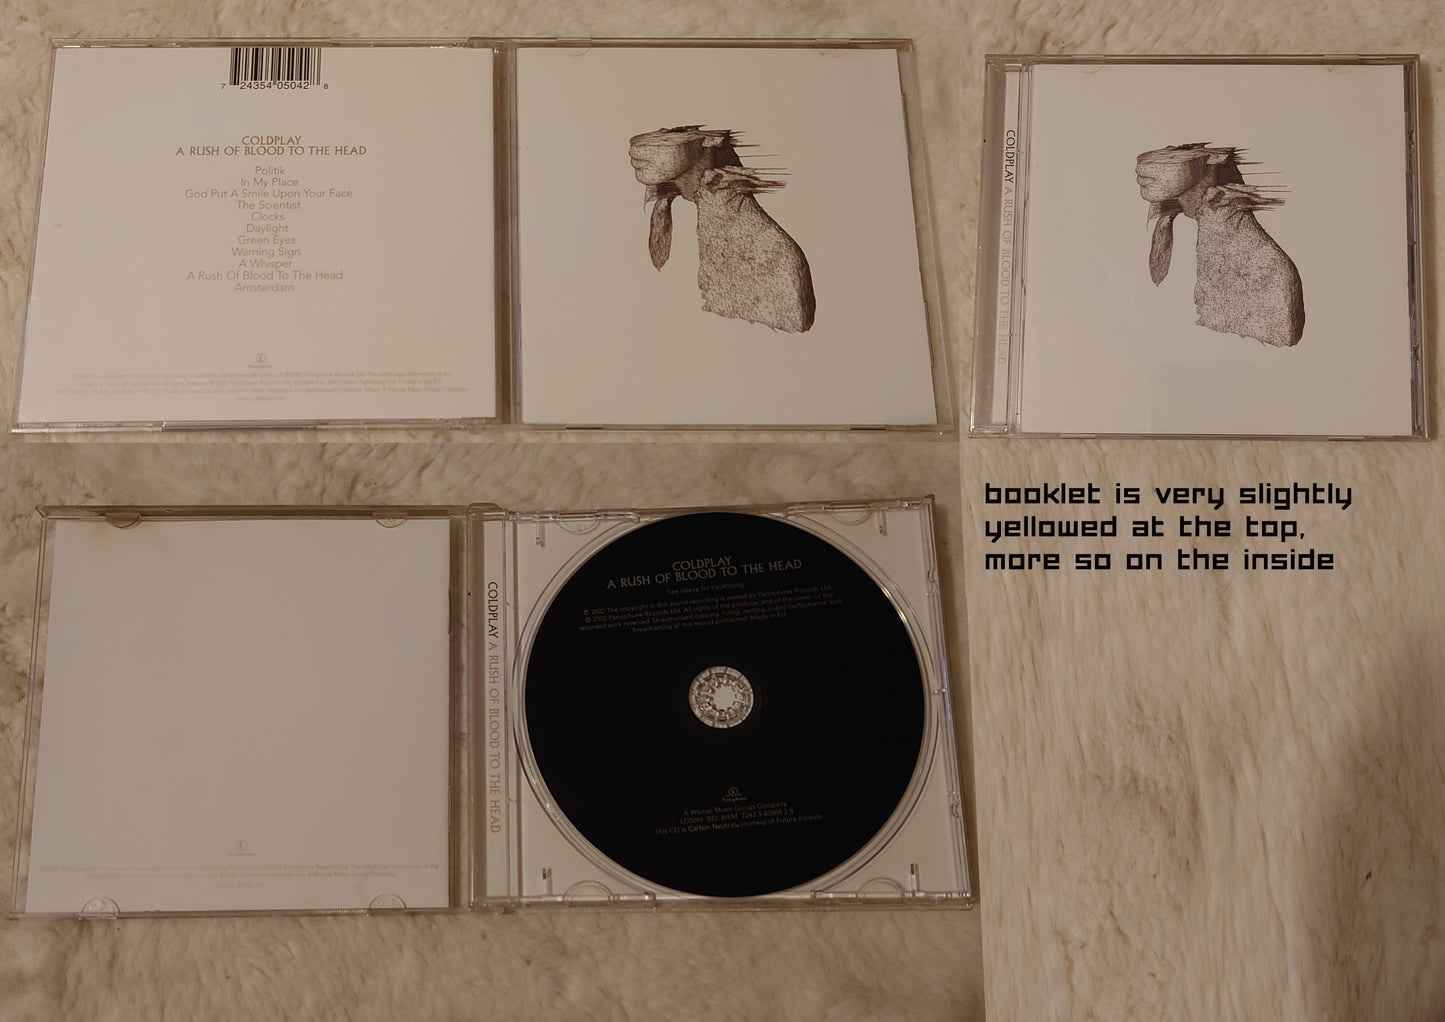 CD albums #1 - Black Sabbath, Blur, Celldweller, Circle of Dust, Coldplay, Foo Fighters